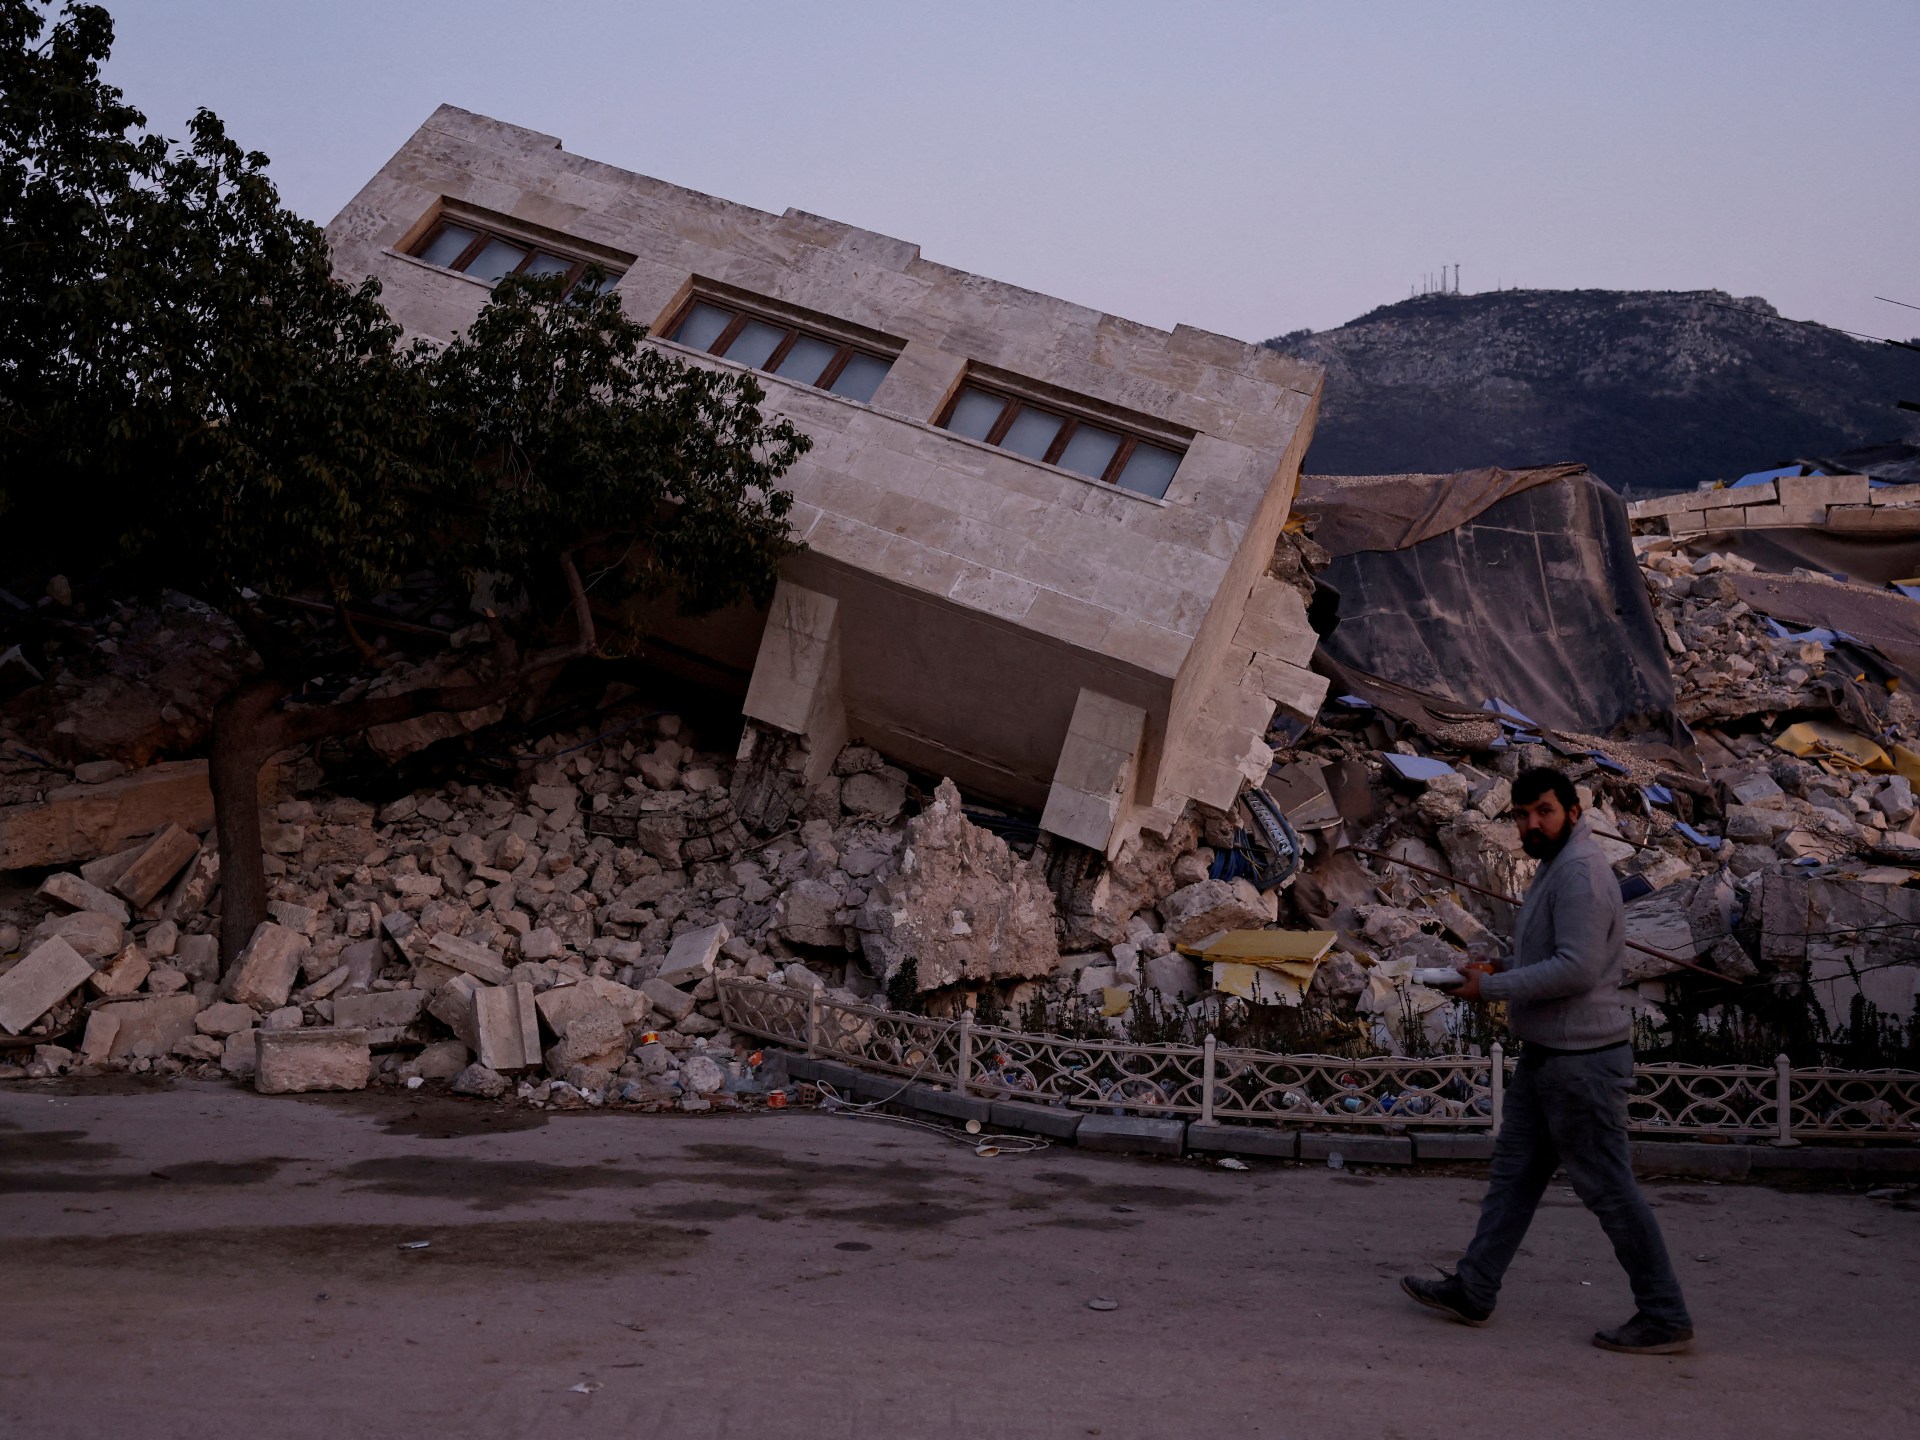 Korban tewas naik di atas 50.000 setelah gempa bumi di Turki dan Suriah |  Berita Gempa Bumi